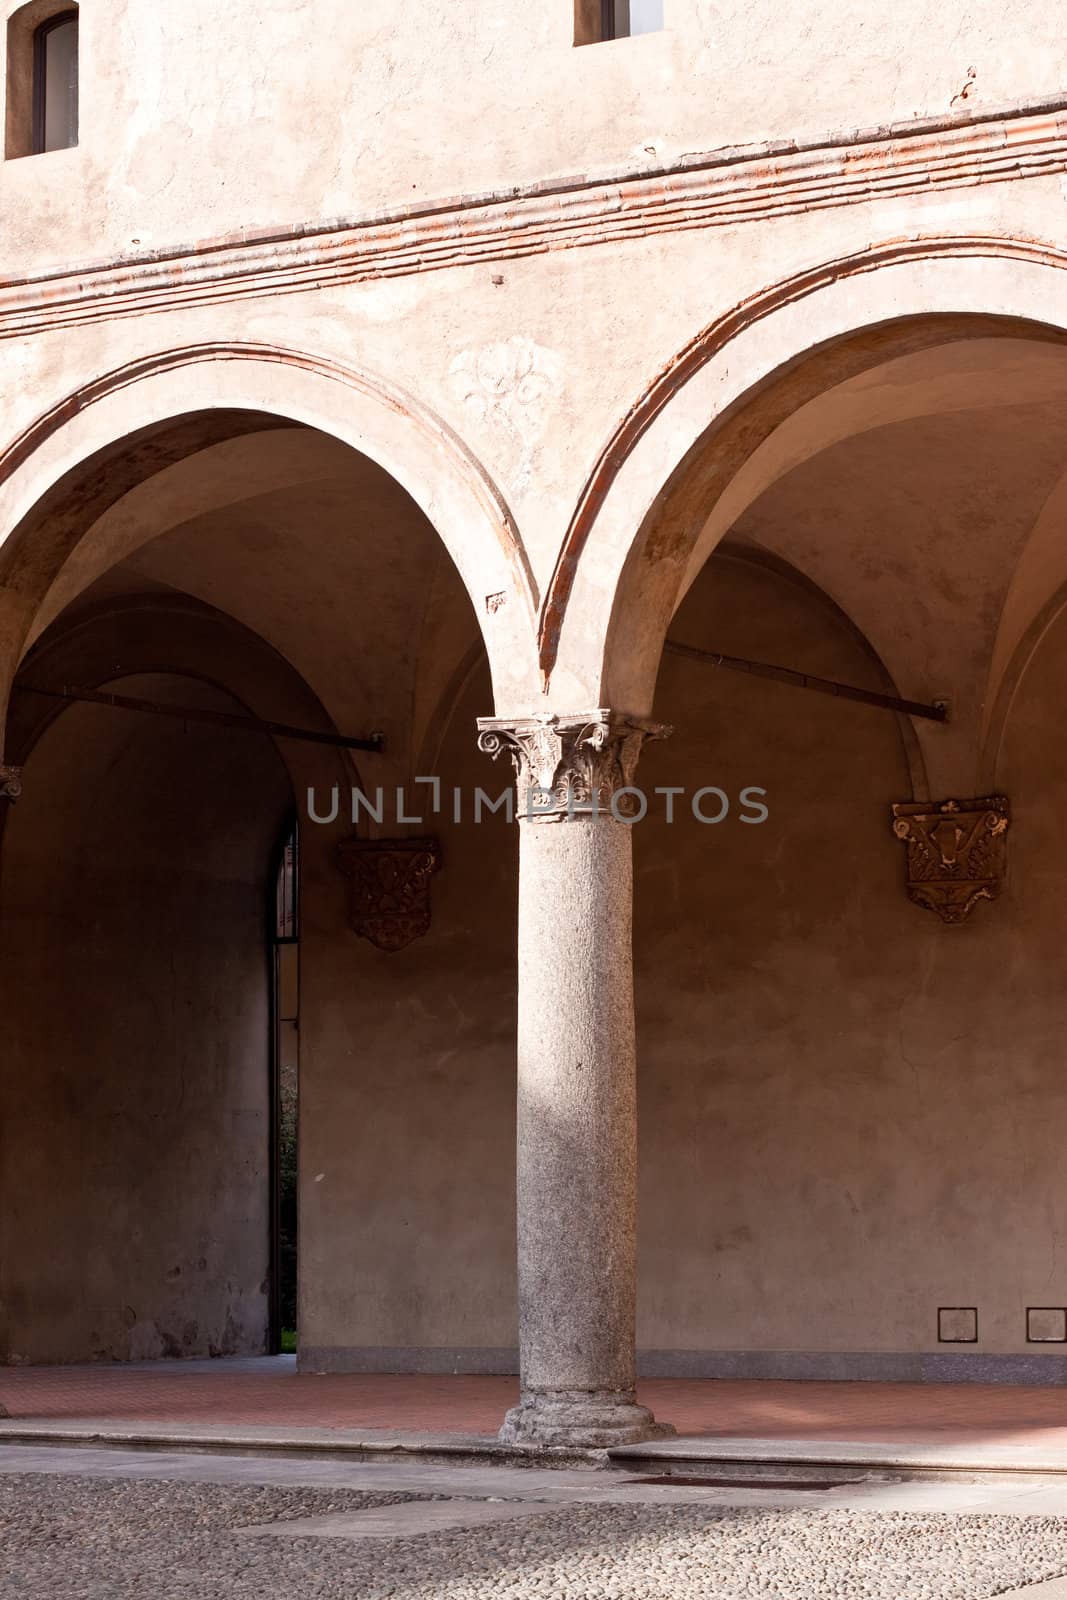 arche in the Milan's castle
